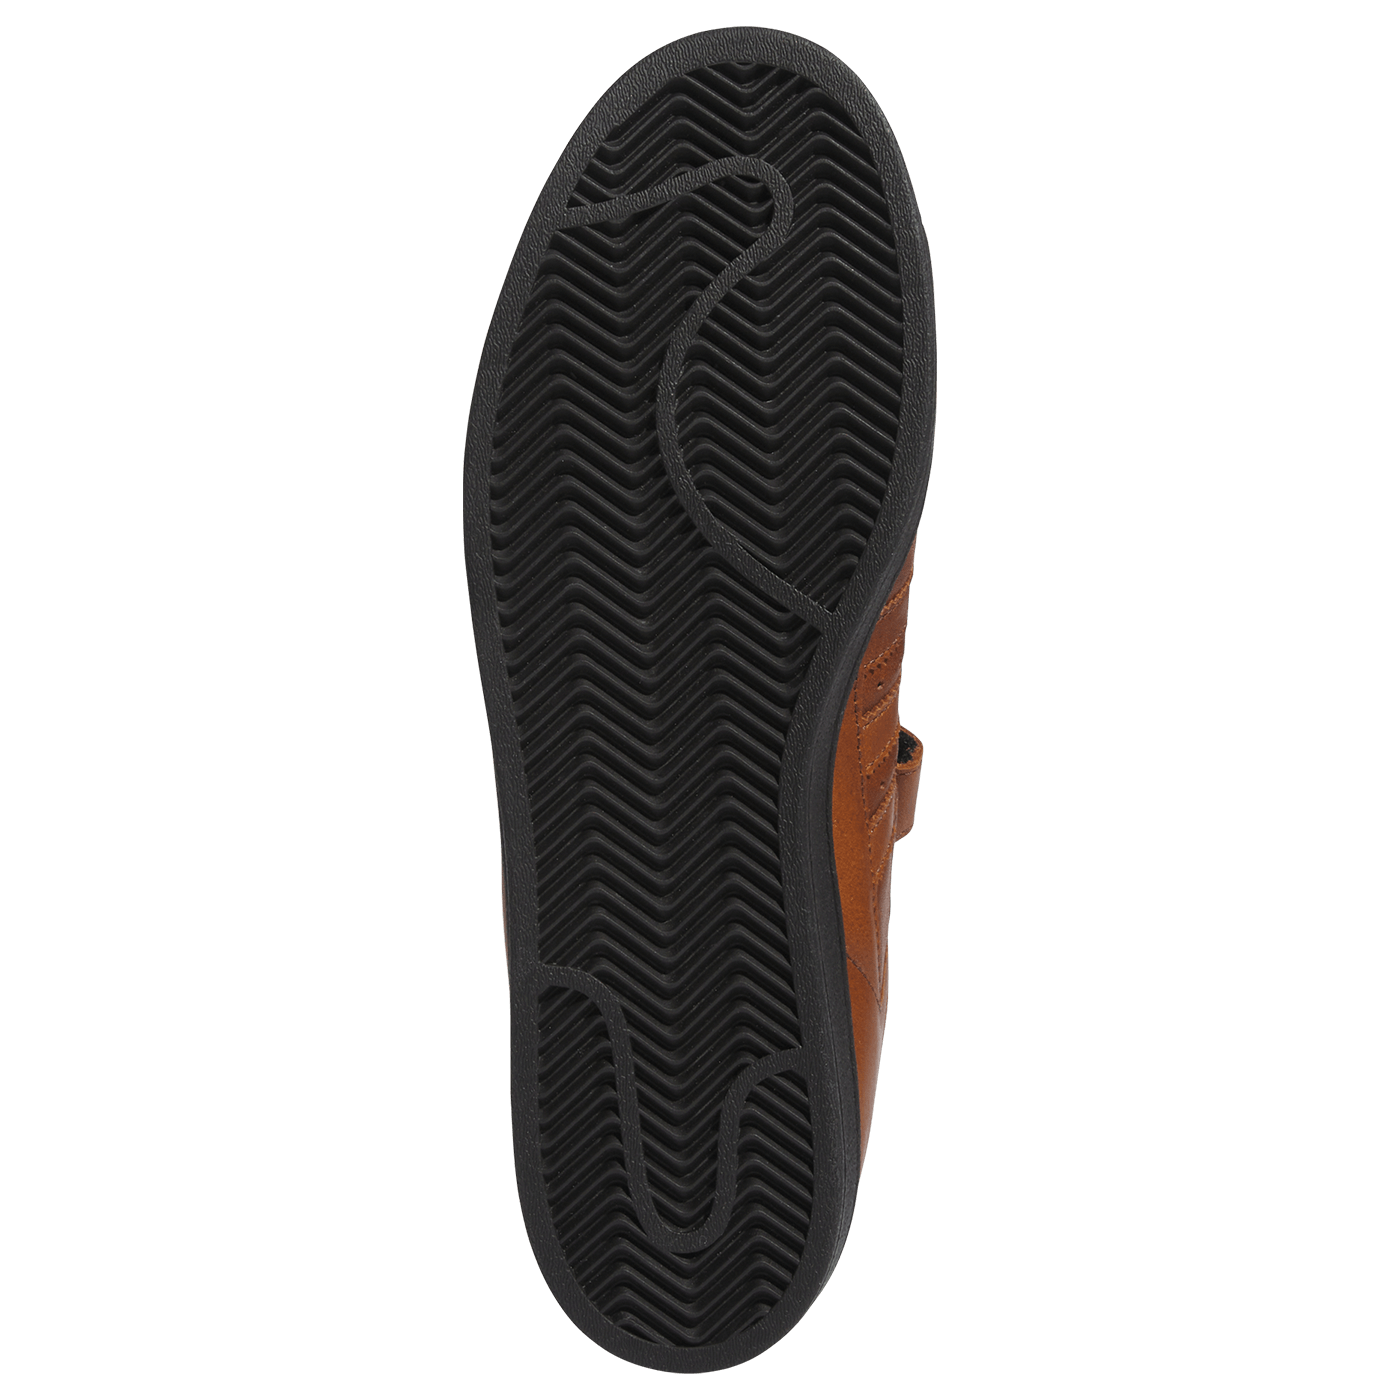 adidas Skateboarding Pro Model ADV x Heitor Black Brown ID3648